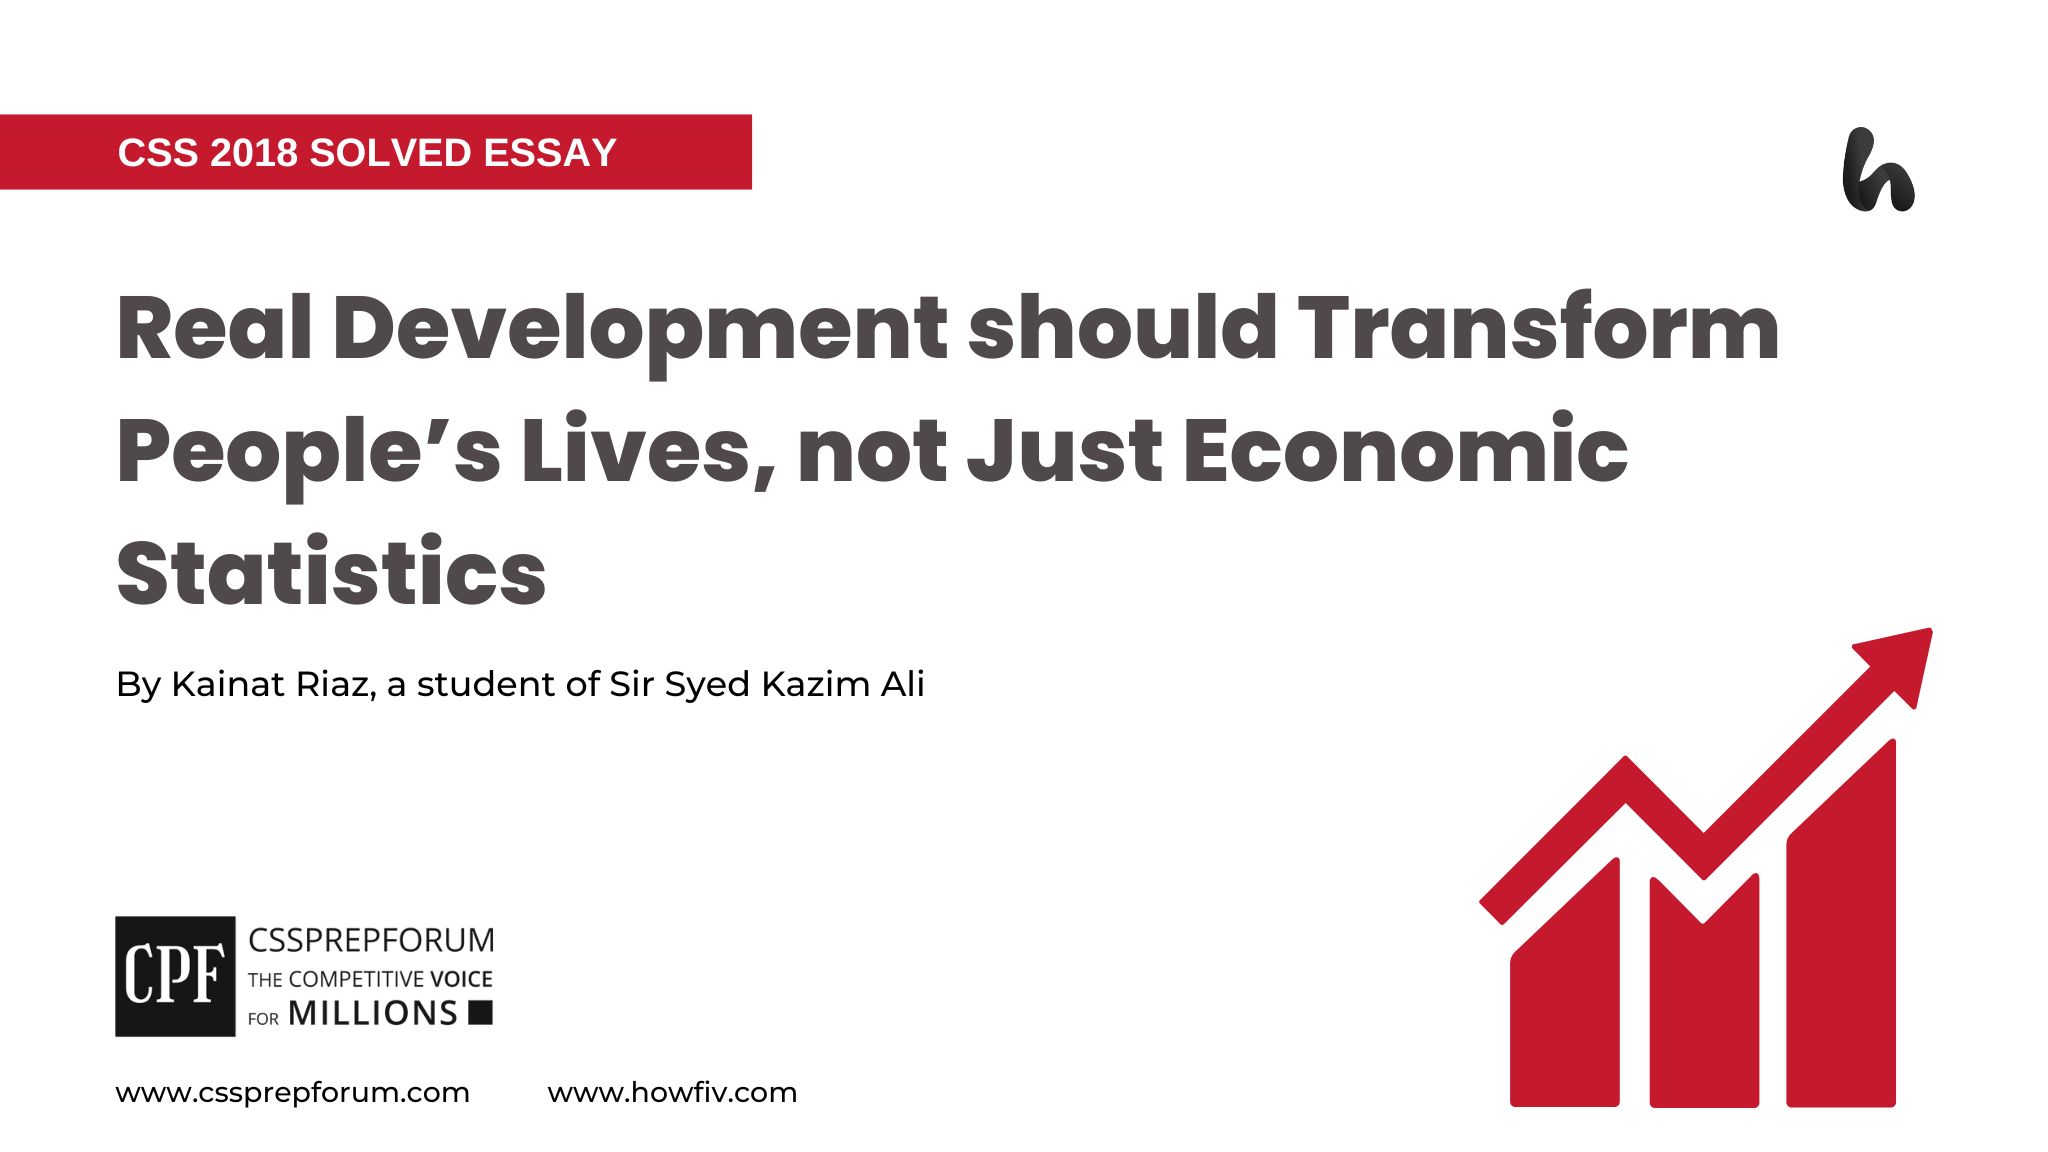 Real Development should Transform People’s Lives, not Just Economic Statistics by Kainat Riaz